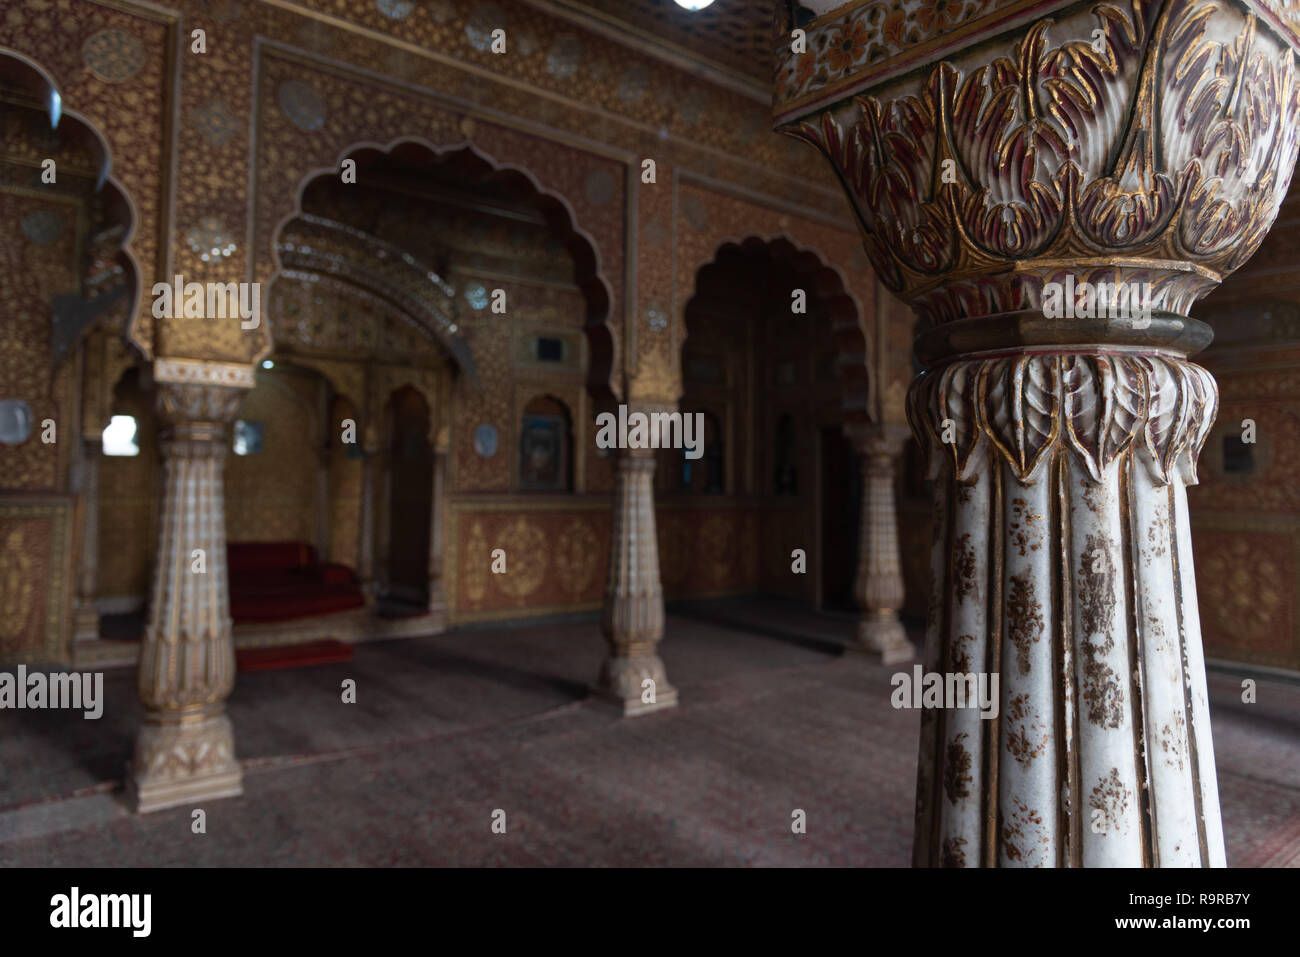 Ornate interior featuring impressively detailed pillars of the Junagarh Fort, Bikaner, Rajasthan, INDIA. Stock Photo